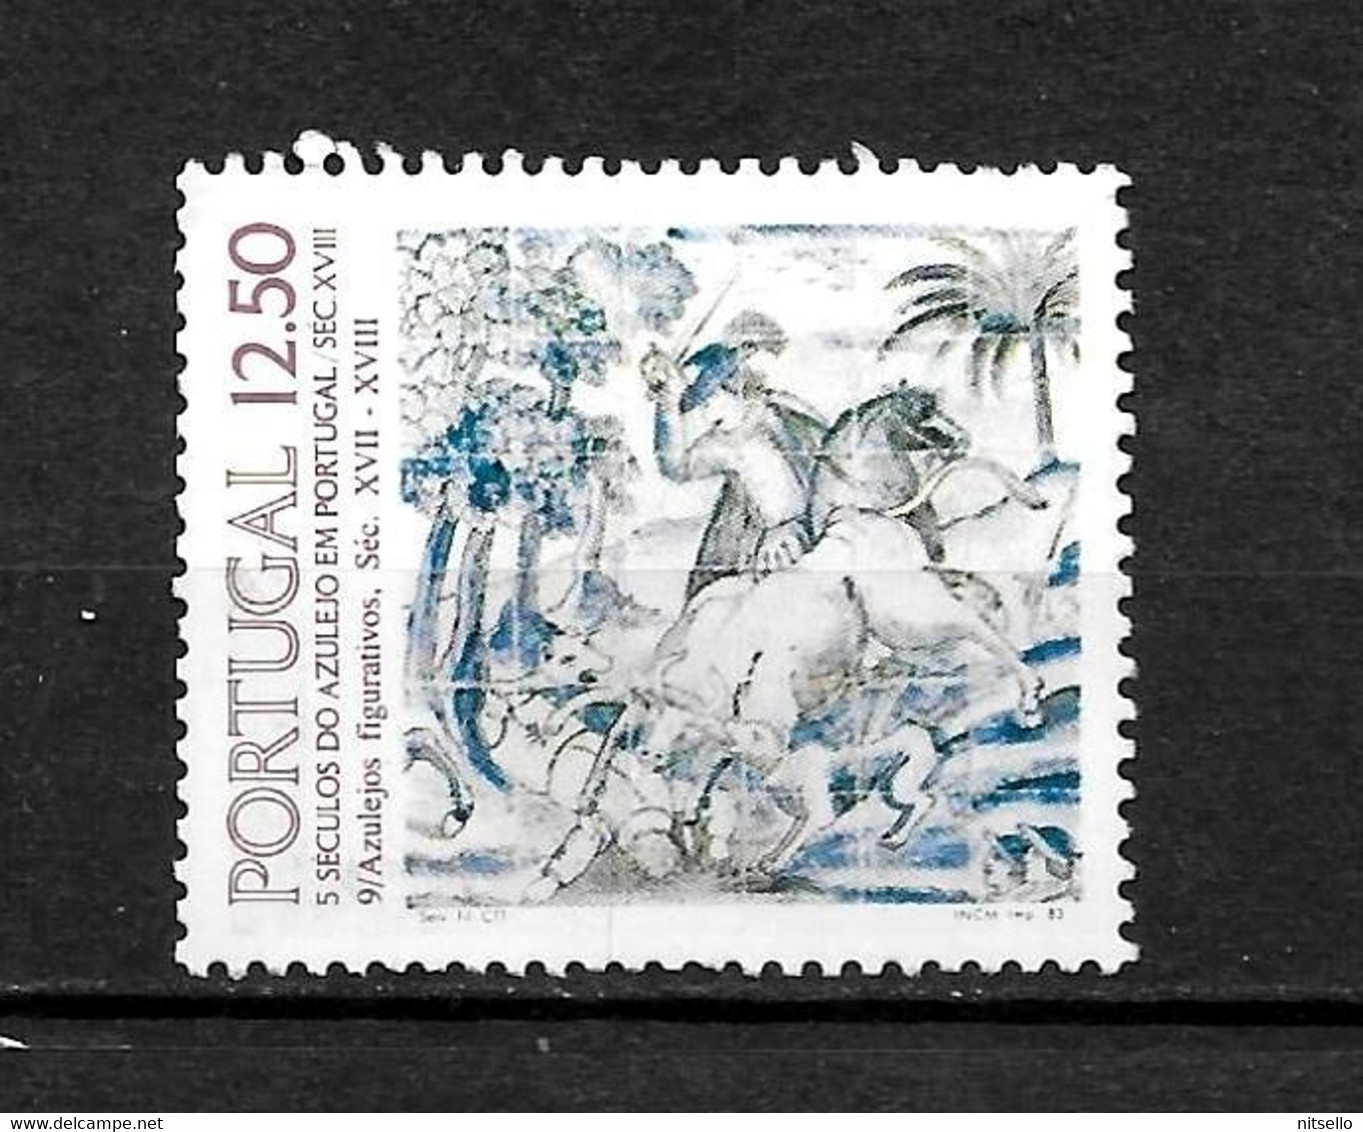 LOTE 1707  ////  PORTUGAL  YVERT Nº: 1571 **MNH //  CATALOG./COTE: 1.50€   ¡¡¡ LIQUIDATION !!! - Unused Stamps